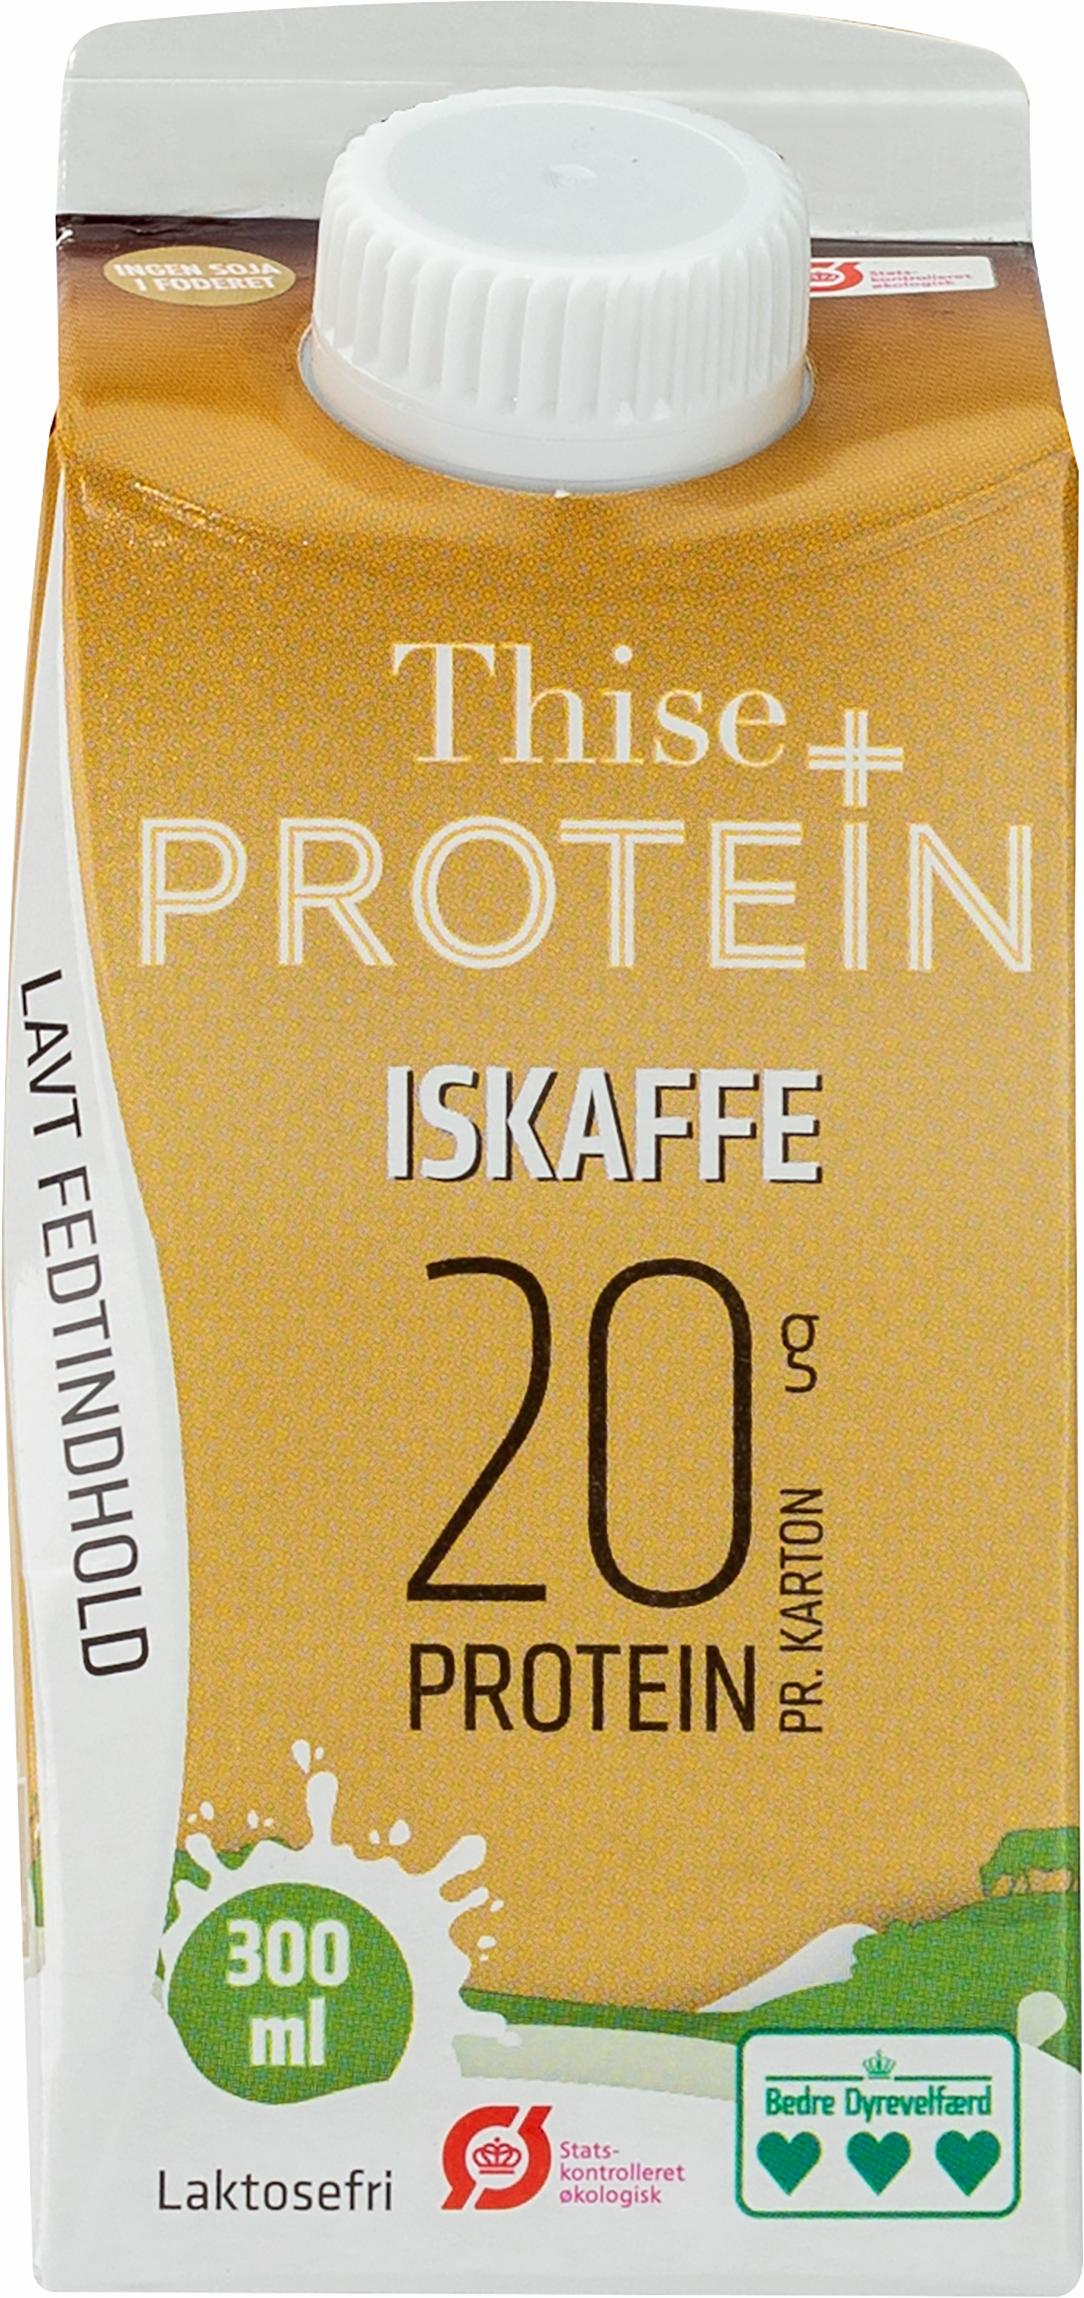 Thise Protein+ iskaffe 300 ml